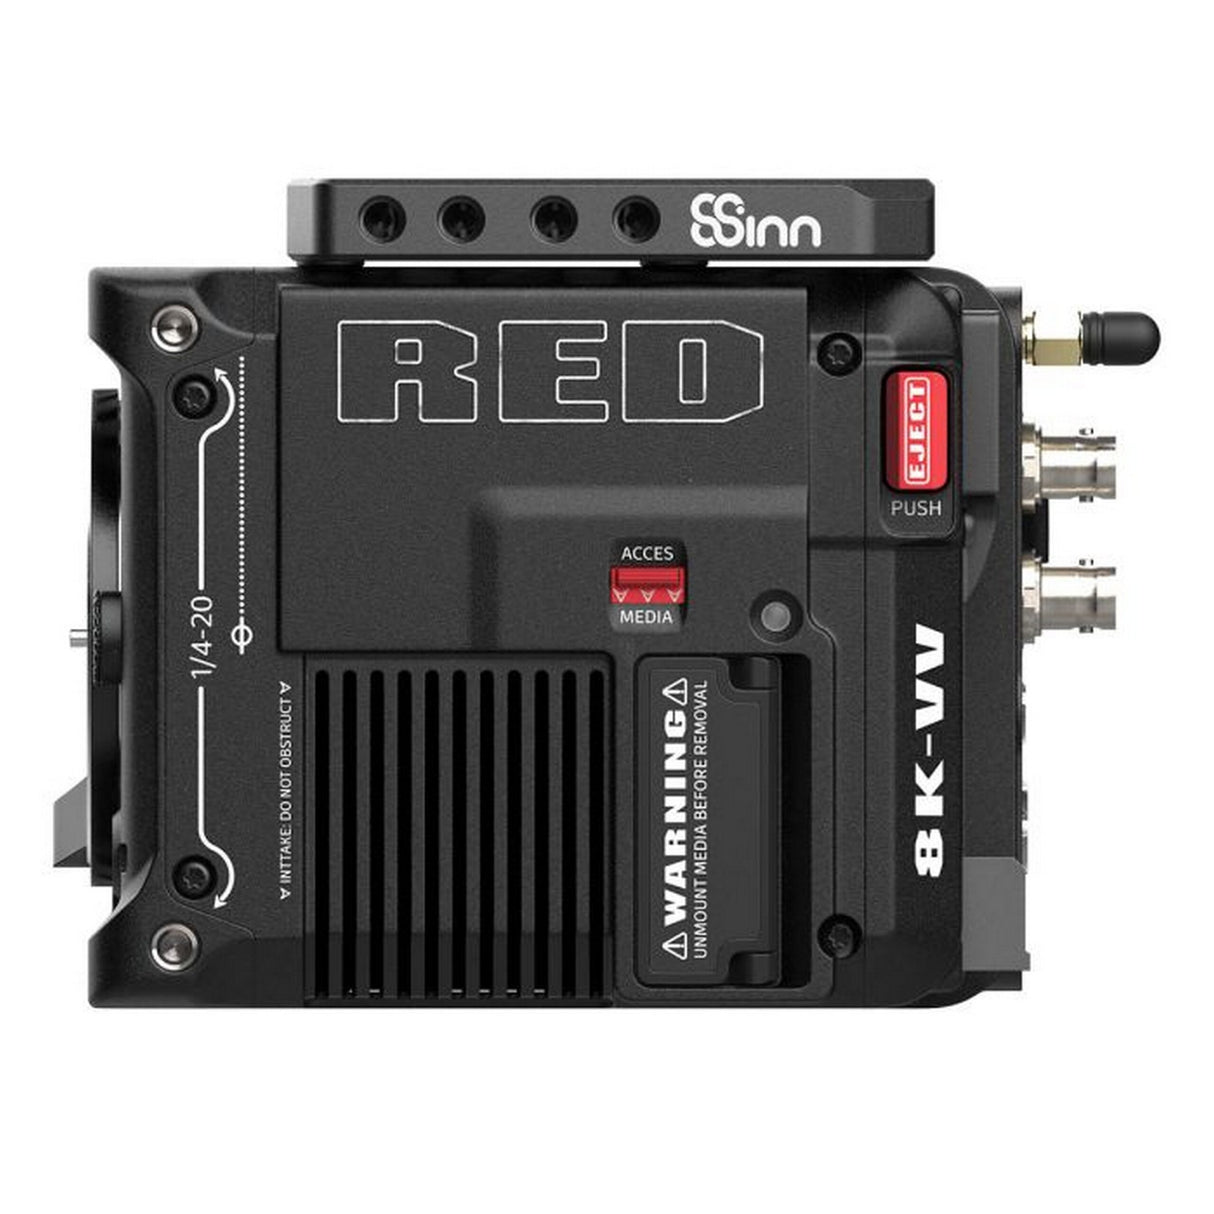 8Sinn 8-TPR-V-R Top Plate for RED V-Raptor